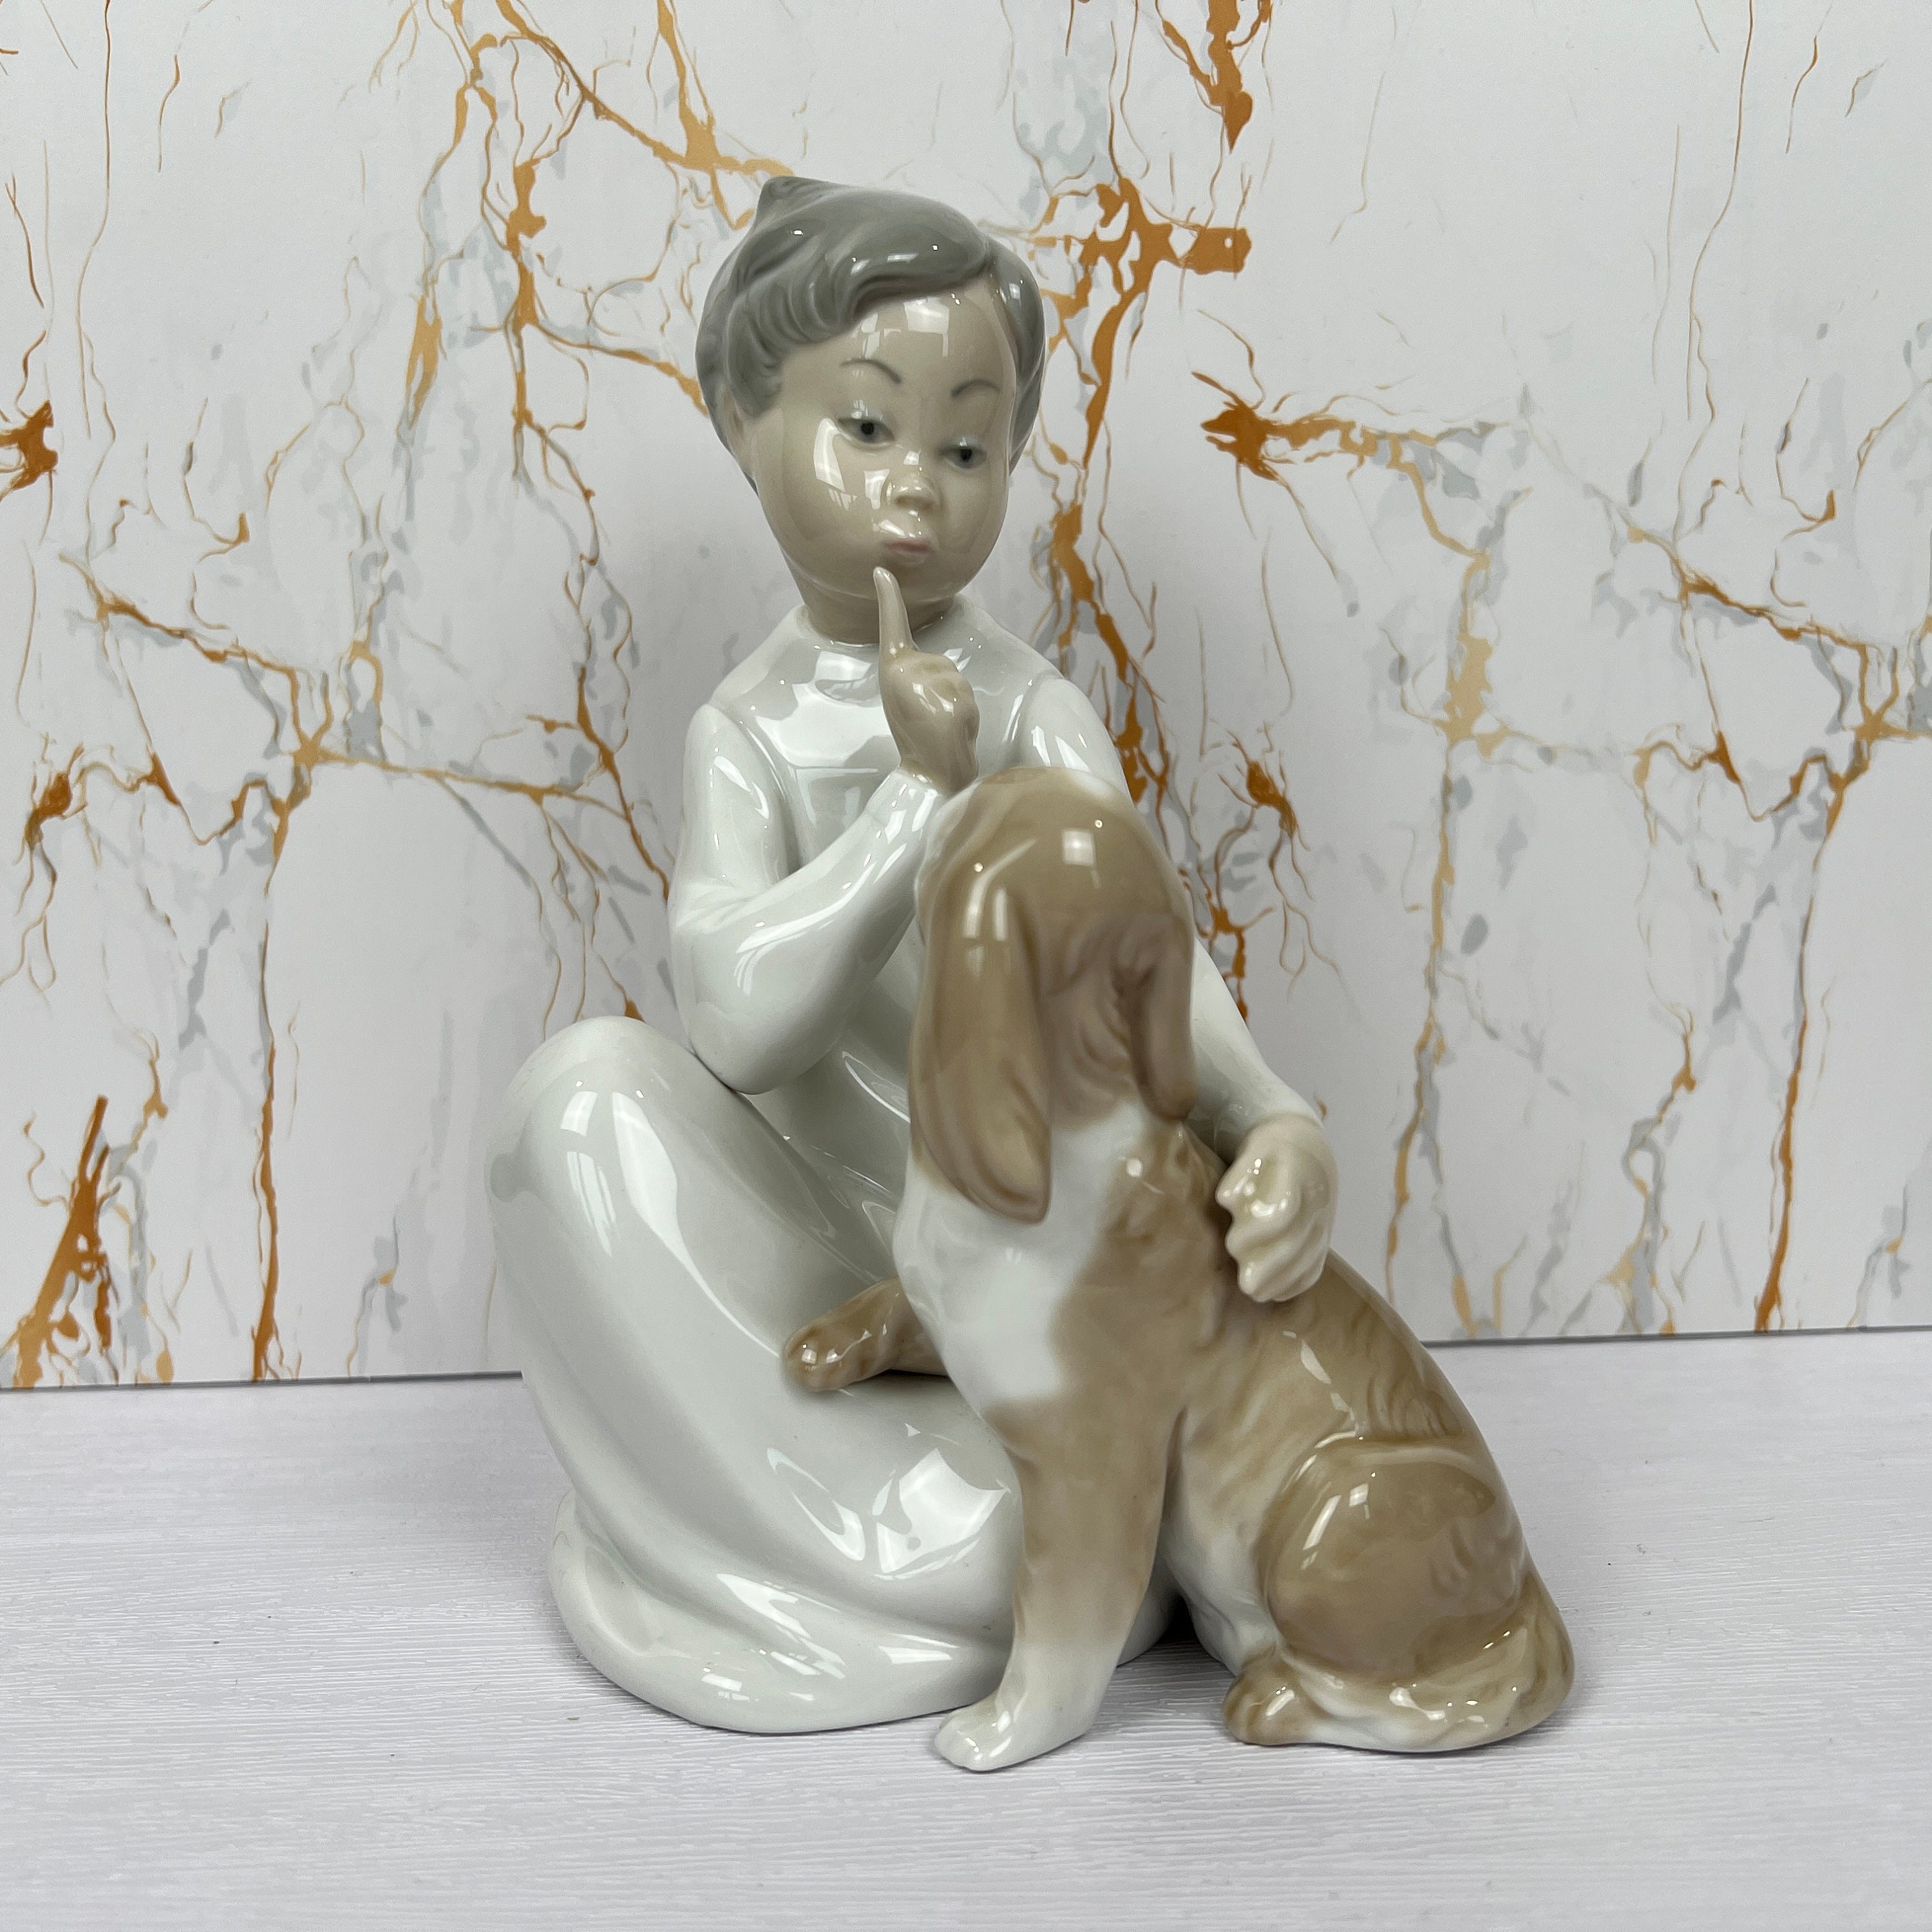 Boy with a Dog - Fine Porcelain Figurine – Truly Earthy